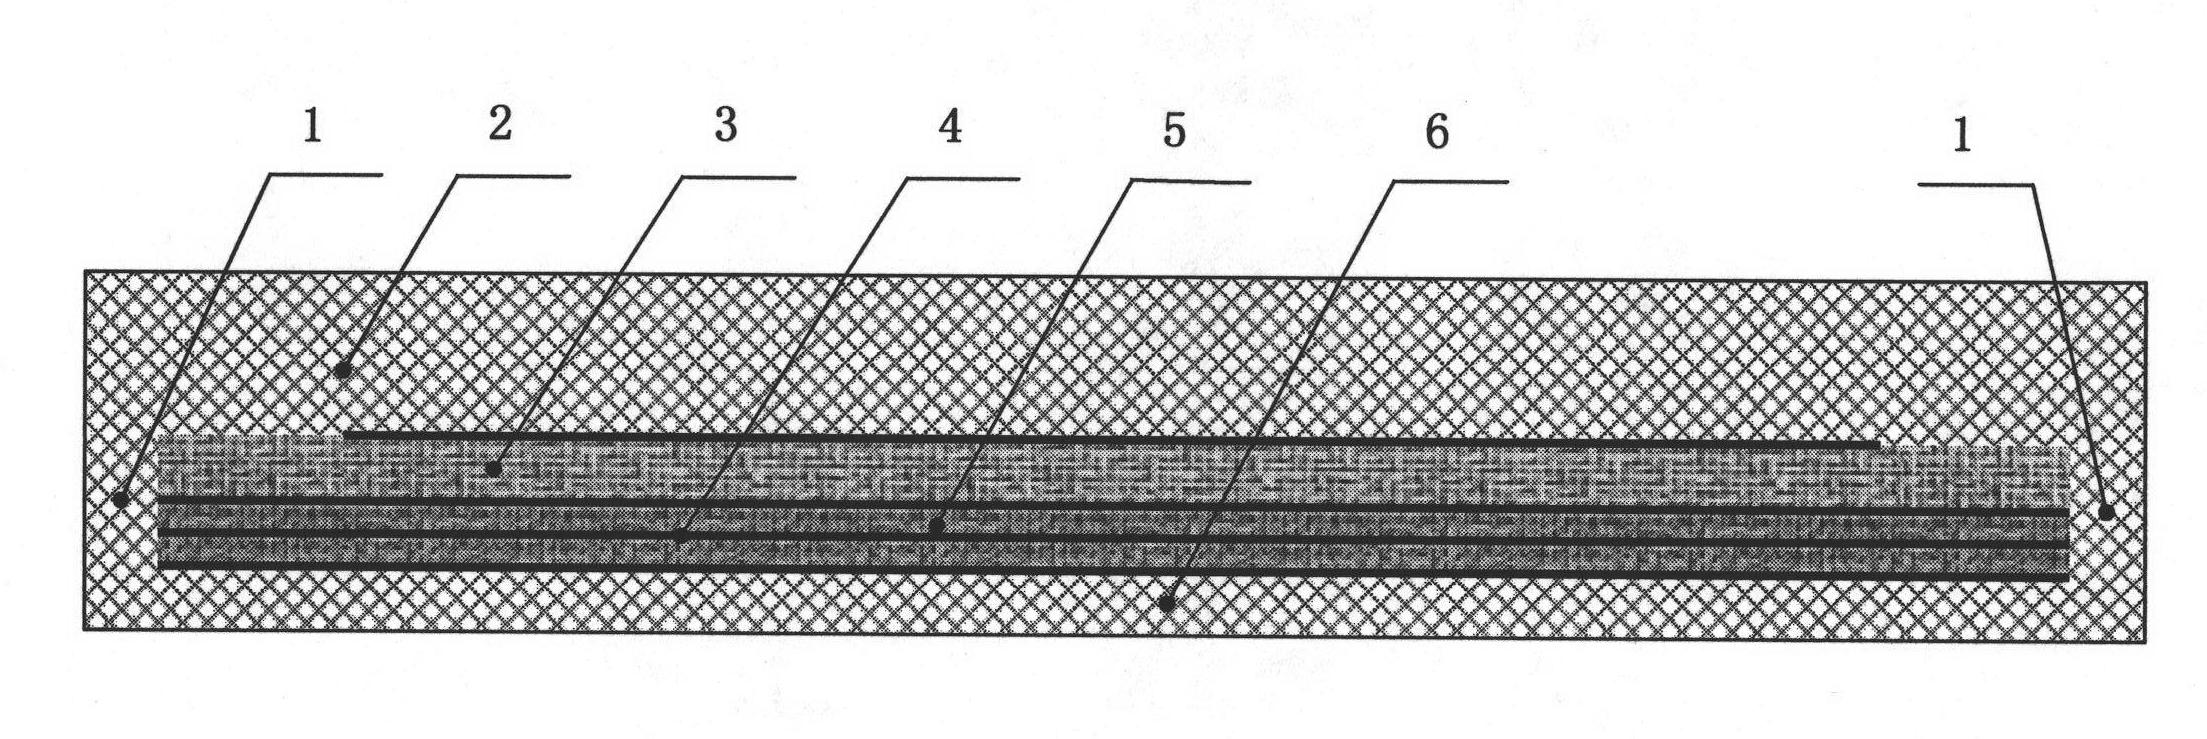 Tube-shaped flame retardant conveying belt with fabric laminations for coal mine